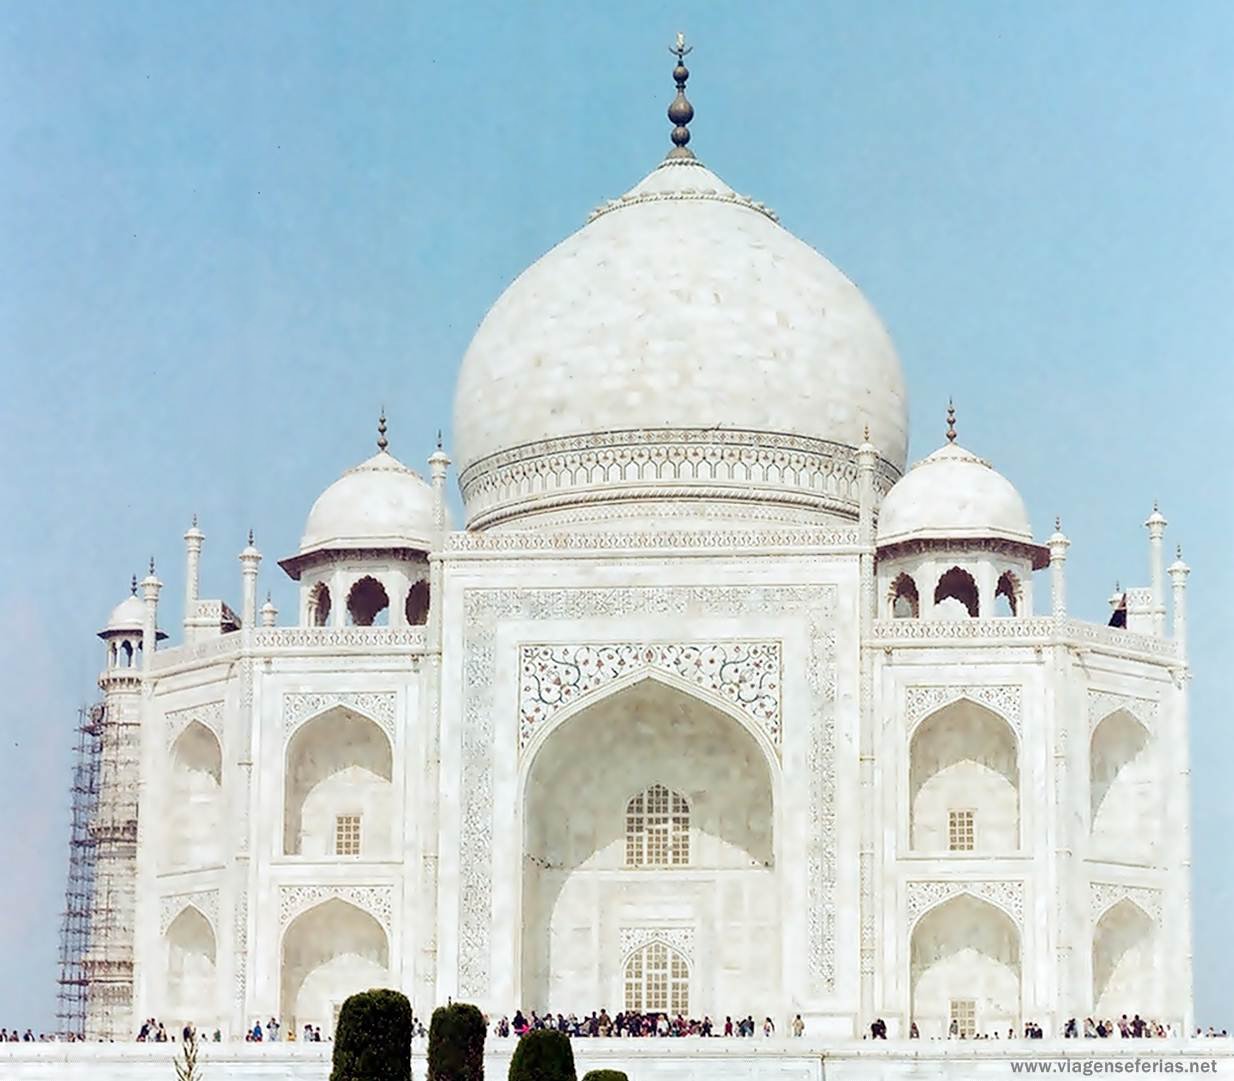 Edificio principal do Taj Mahal em Agra na Índia